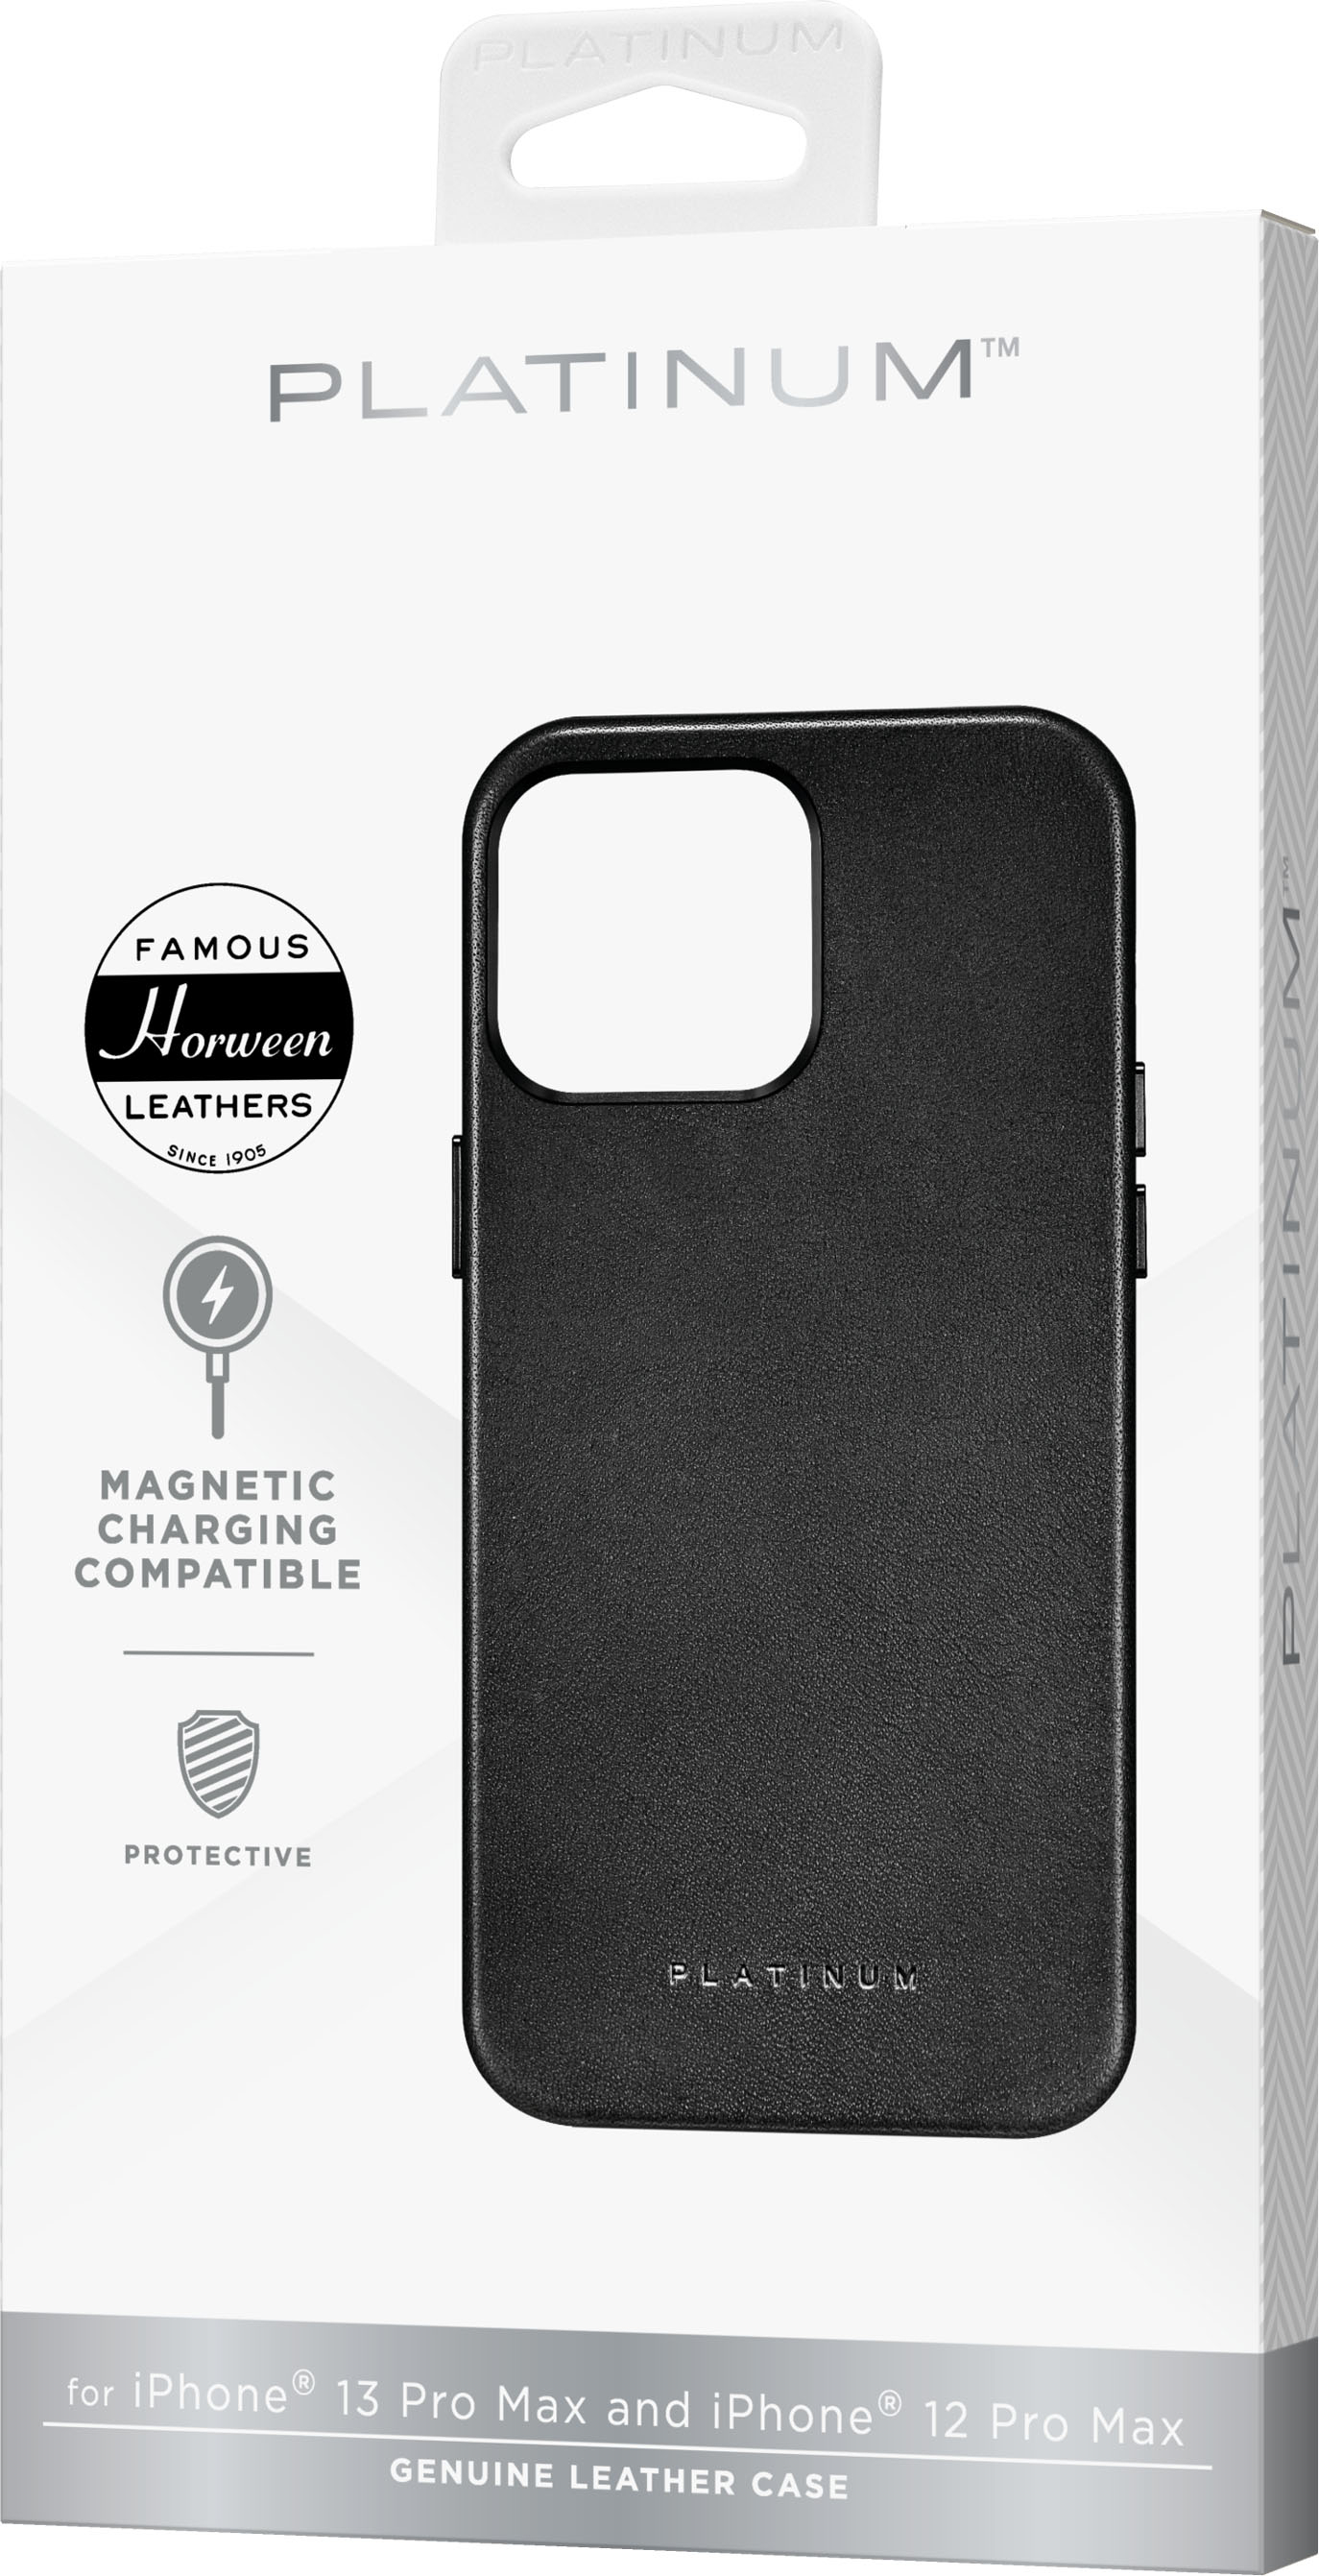 iPhone 12 Mini Case from BandWerk – Ostrich | Blue Gold